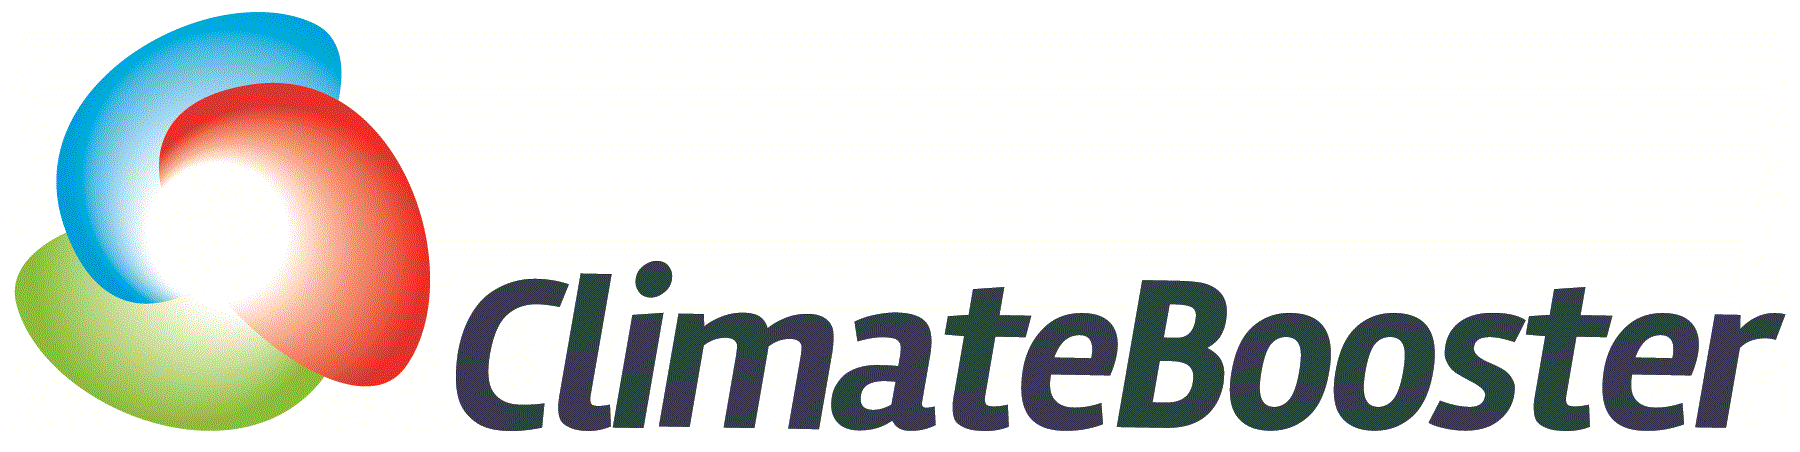 Logo Climatebooster radiatorbooster